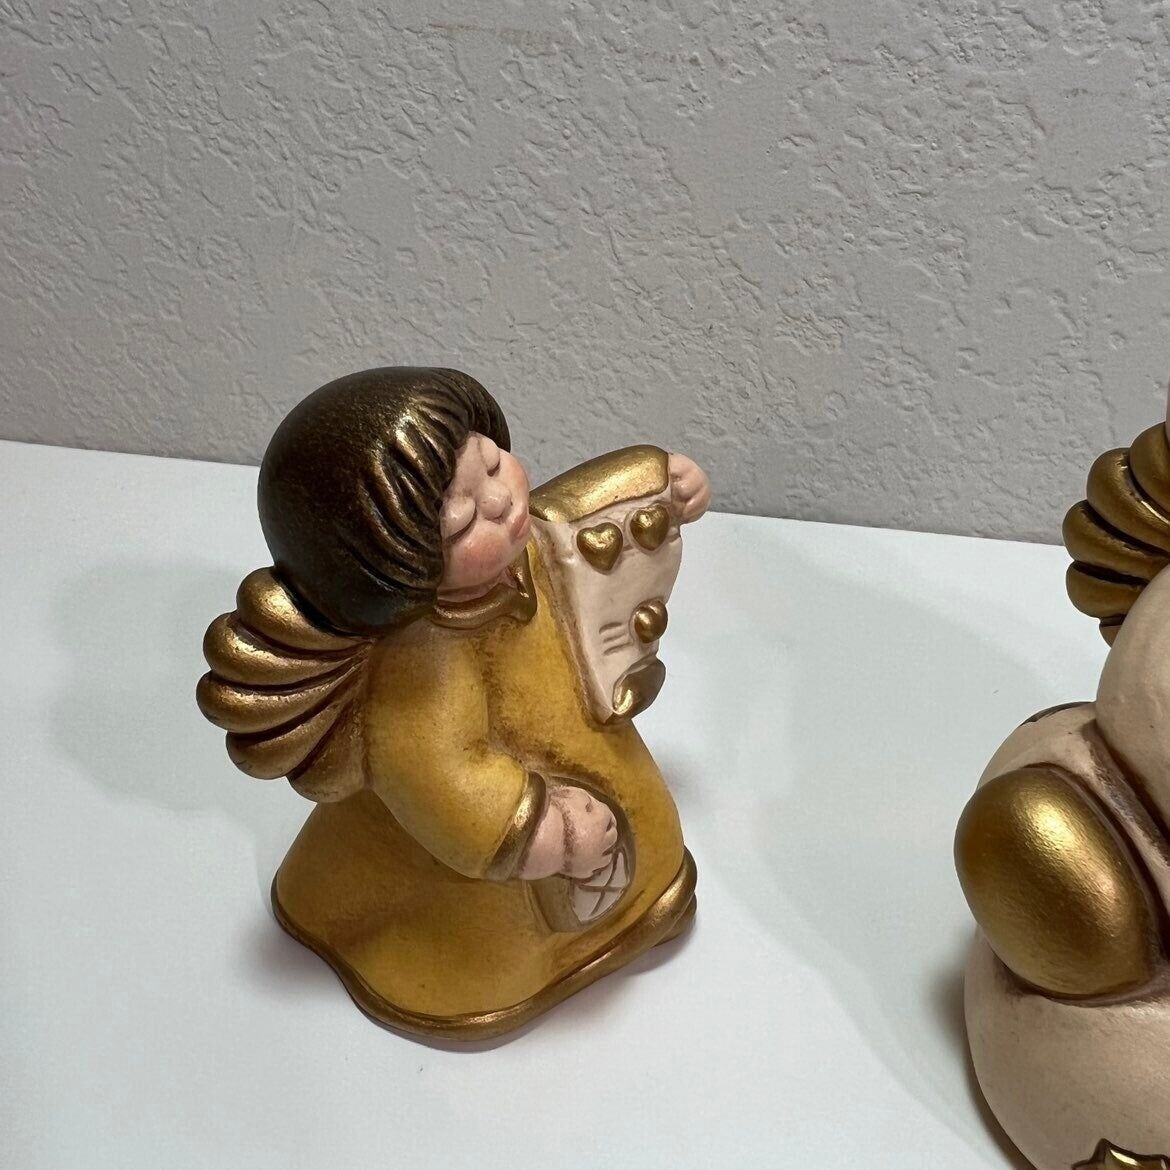 2 Thun Angel Figurines Italian Home Decor Porcelain Made in Italy